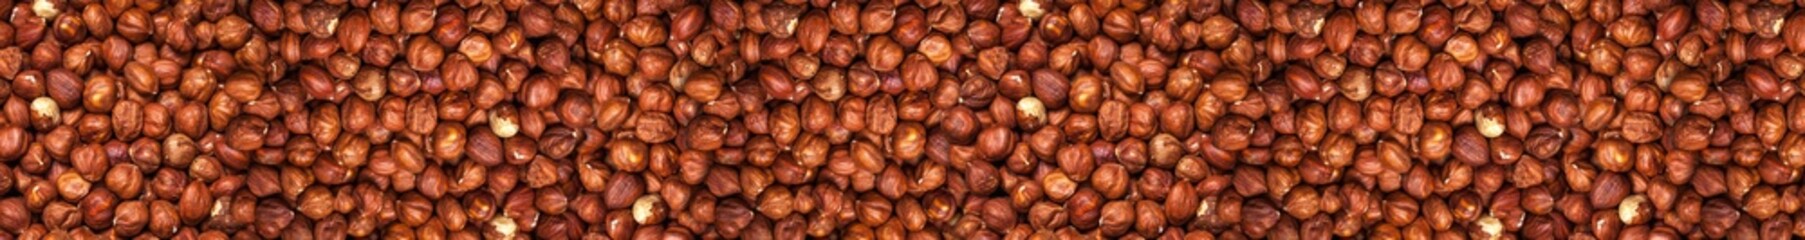 Hazelnuts scattered in skins